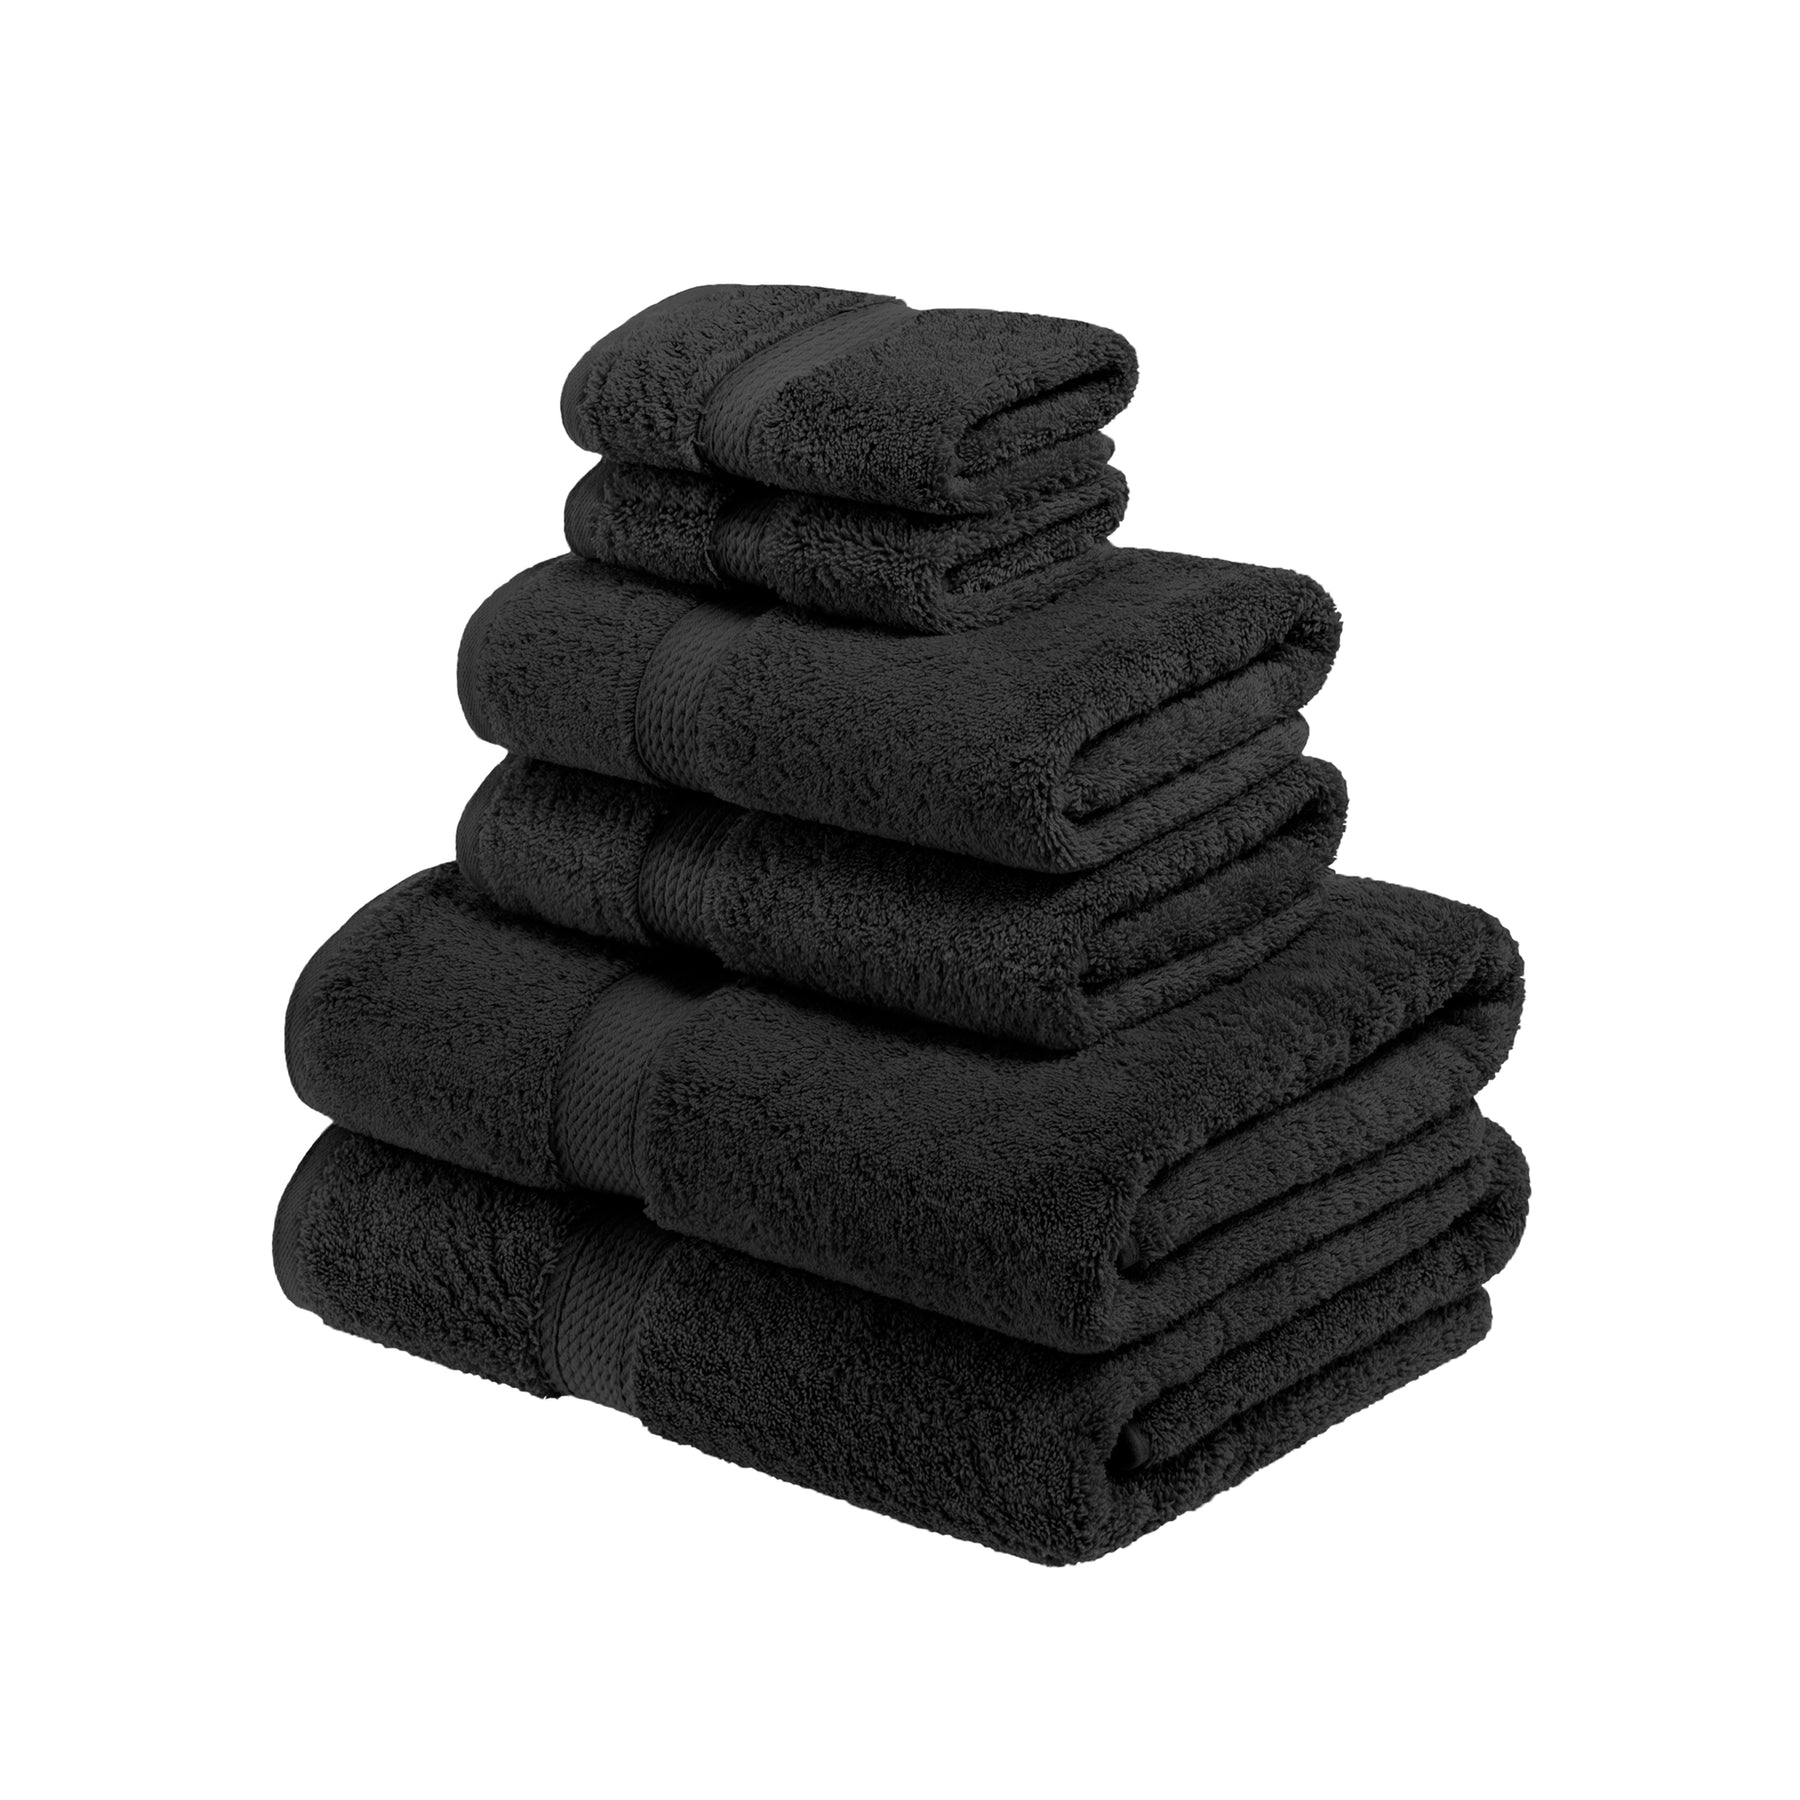 Superior Egyptian Cotton Heavyweight 6 Piece Bath Towel Set - Black